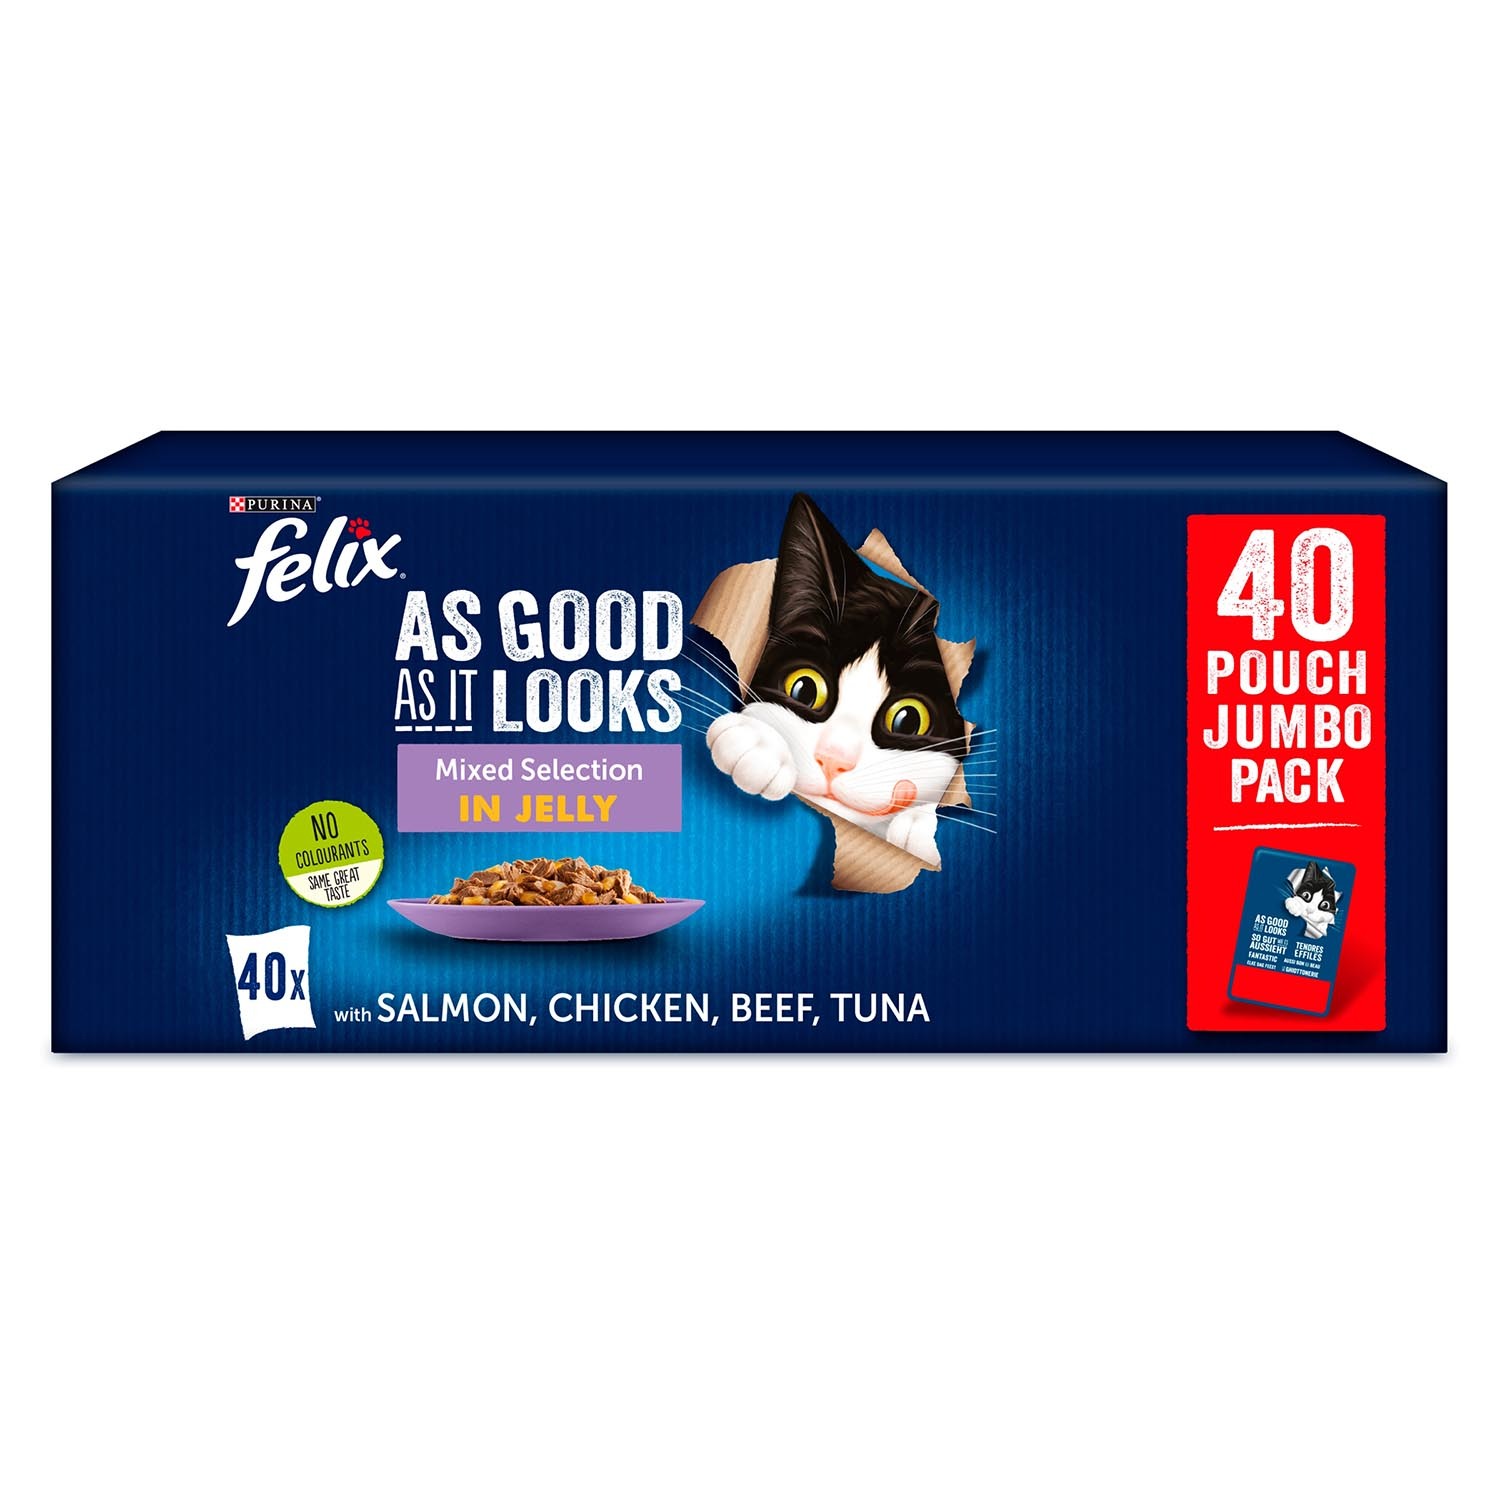 Felix 'As Good as it Looks' Mix Selection Jumbo Pack Image 1